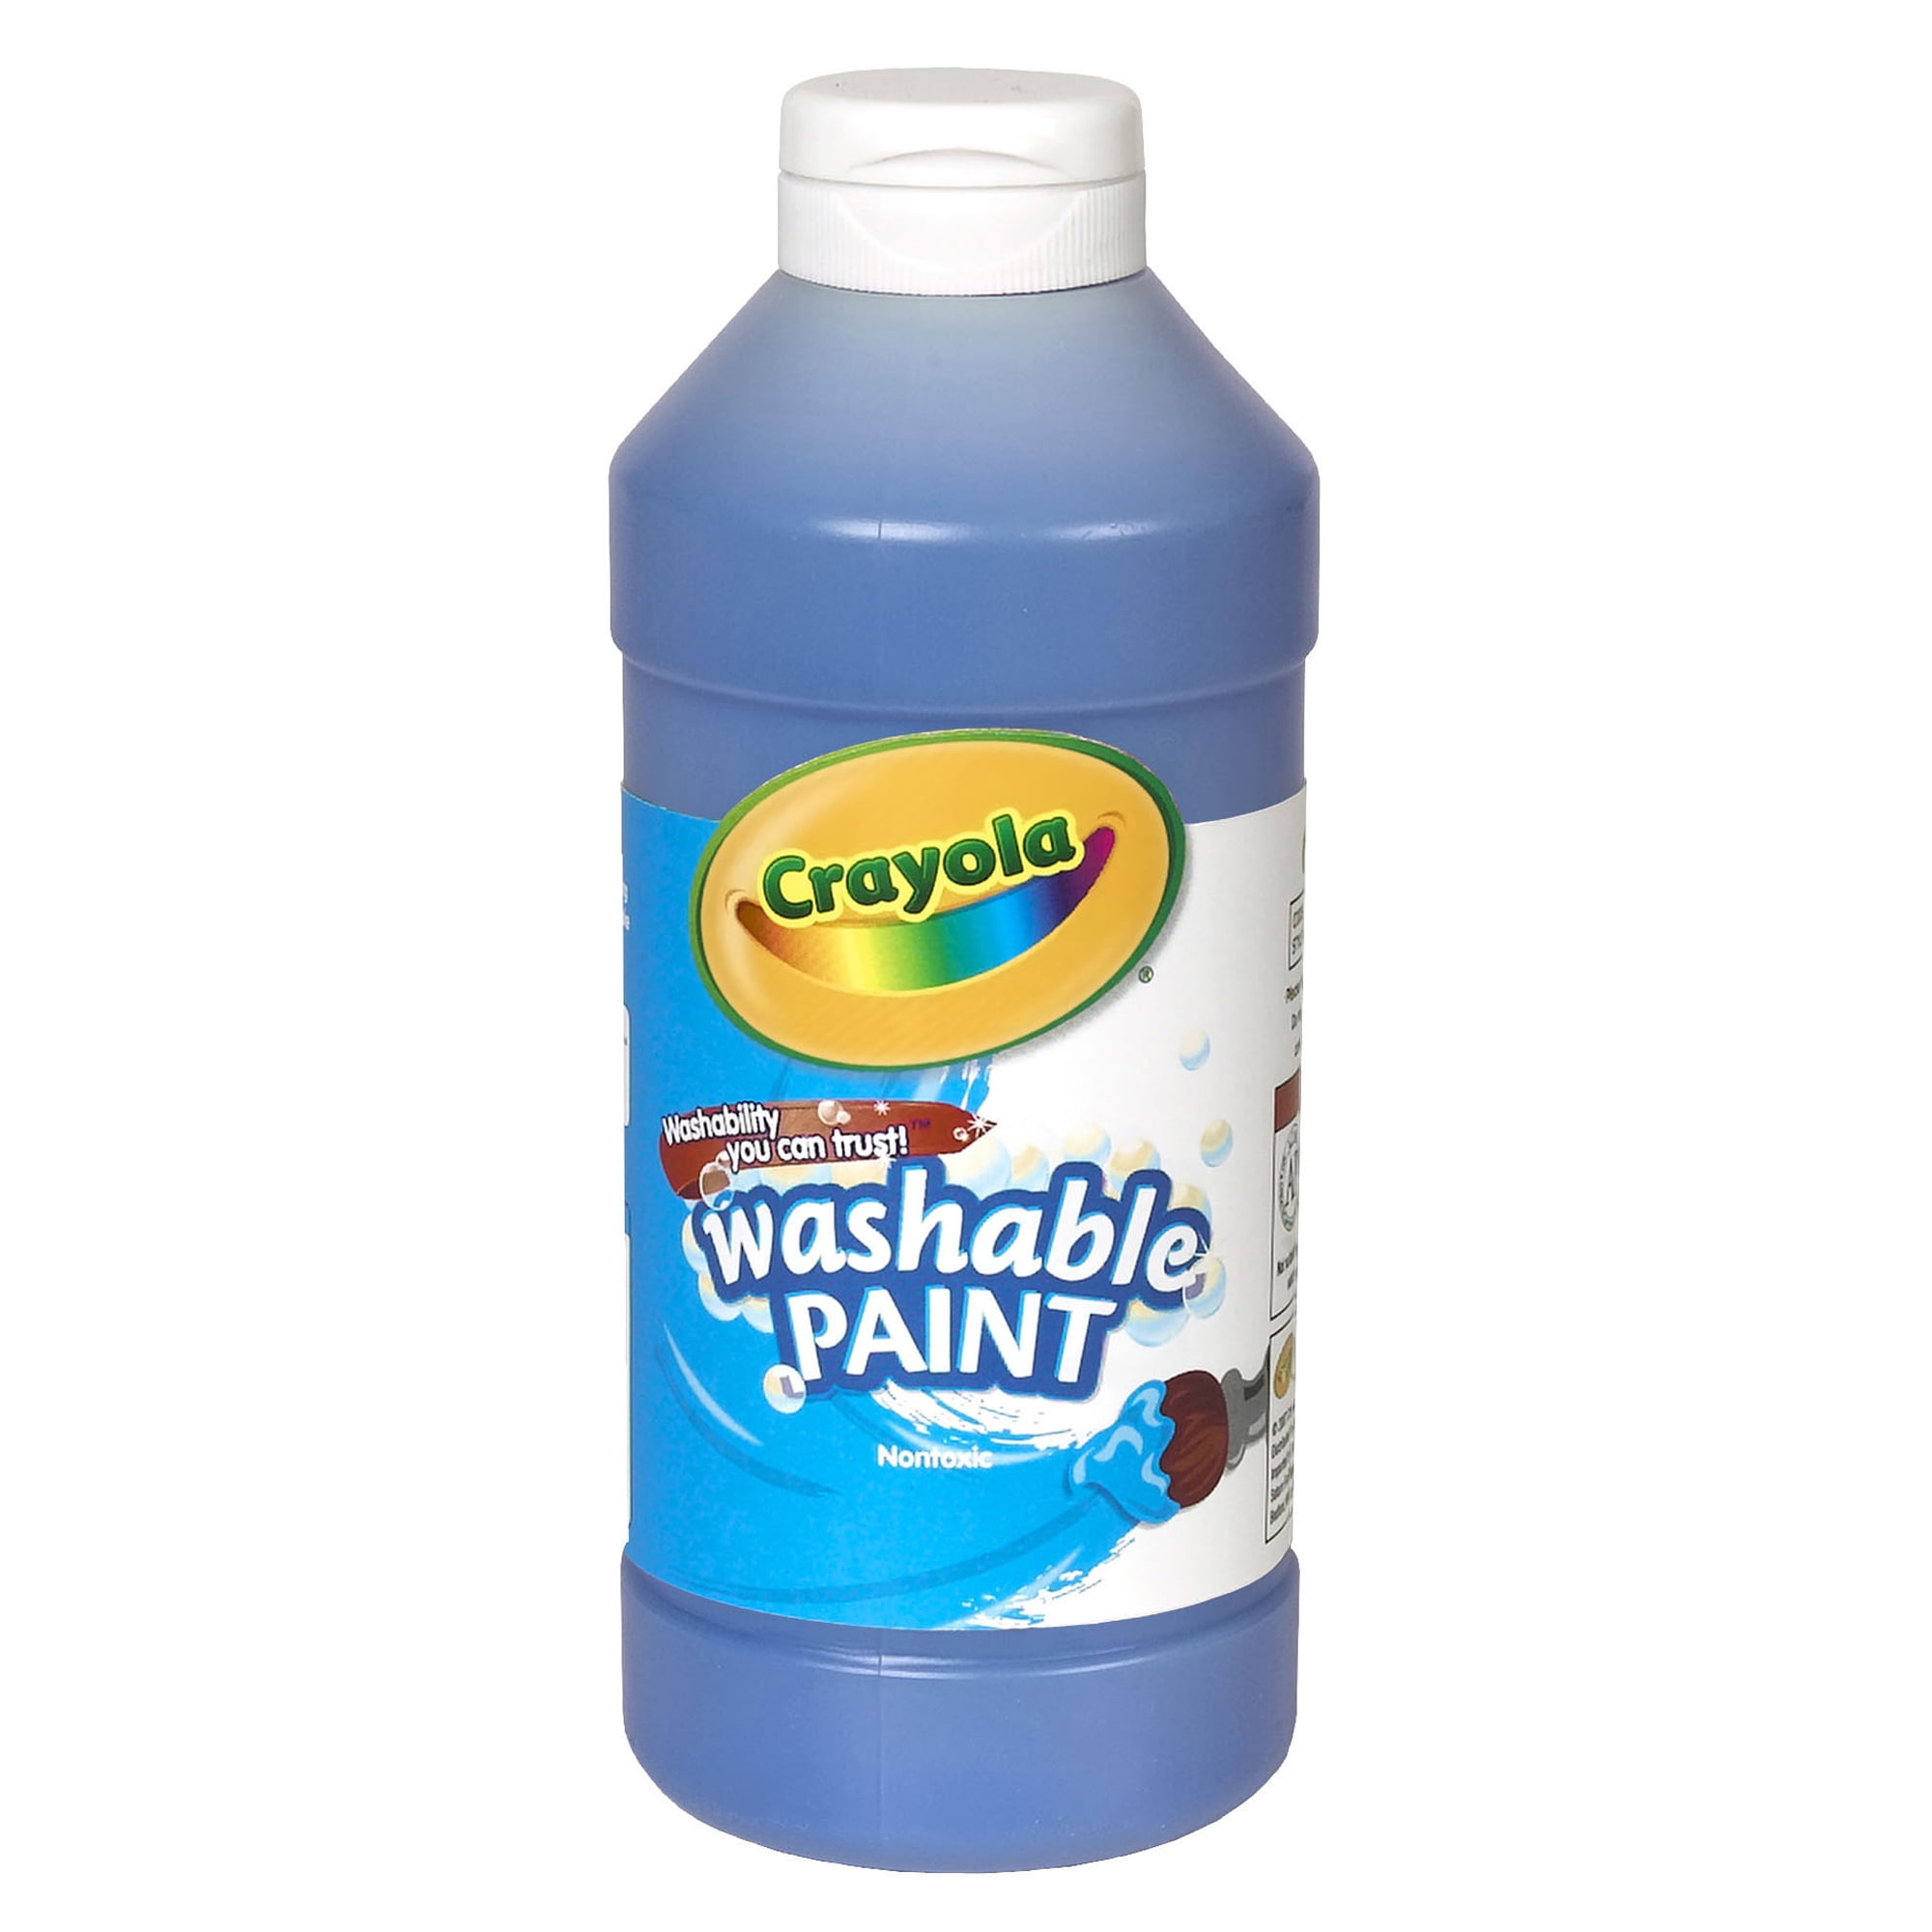 Crayola Project Paint, Washable, Classic - 6 pack, 2 fl oz bottles